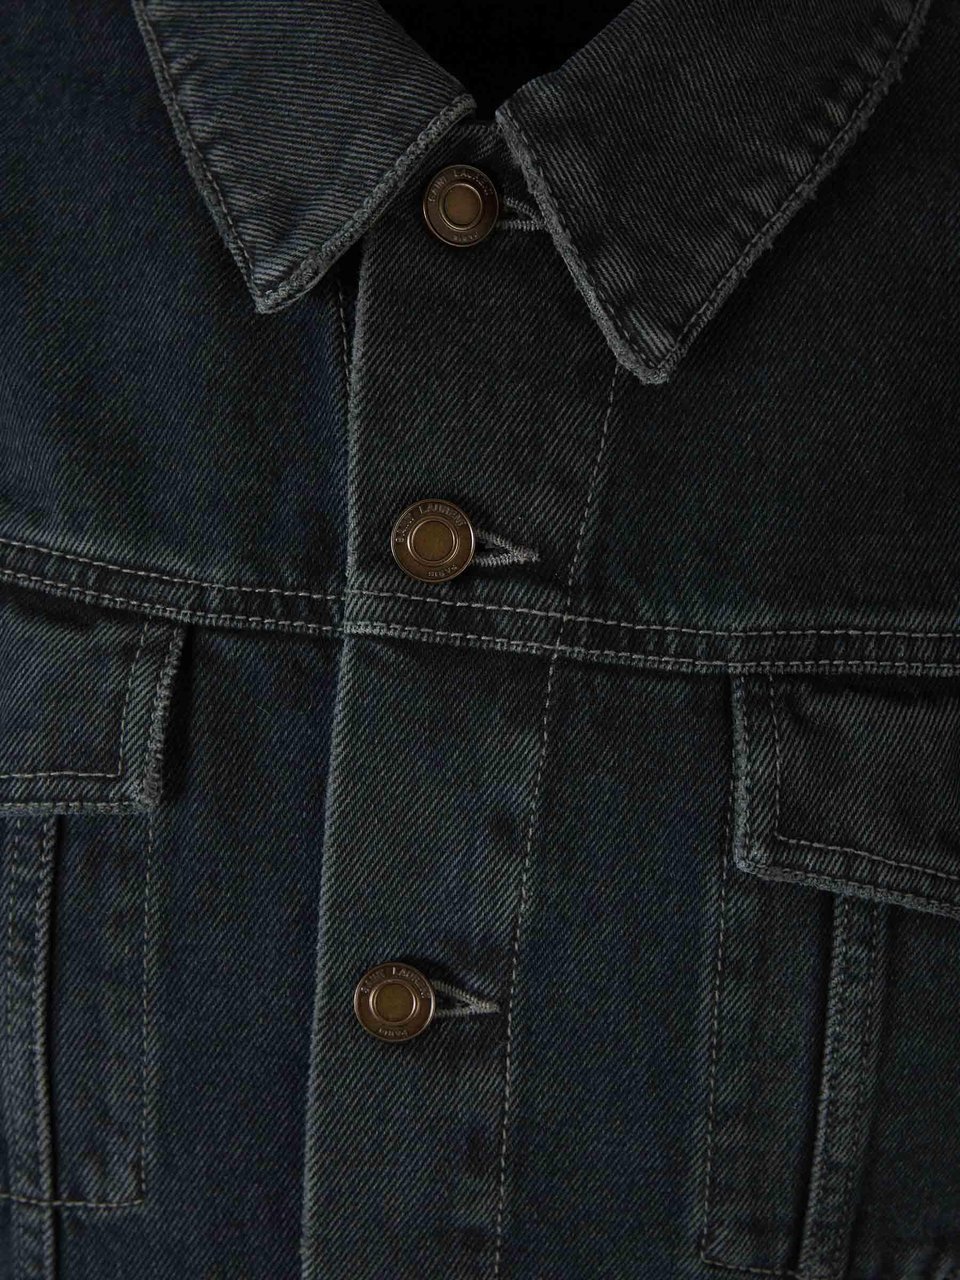 Saint Laurent Cotton Denim Jacket Zwart